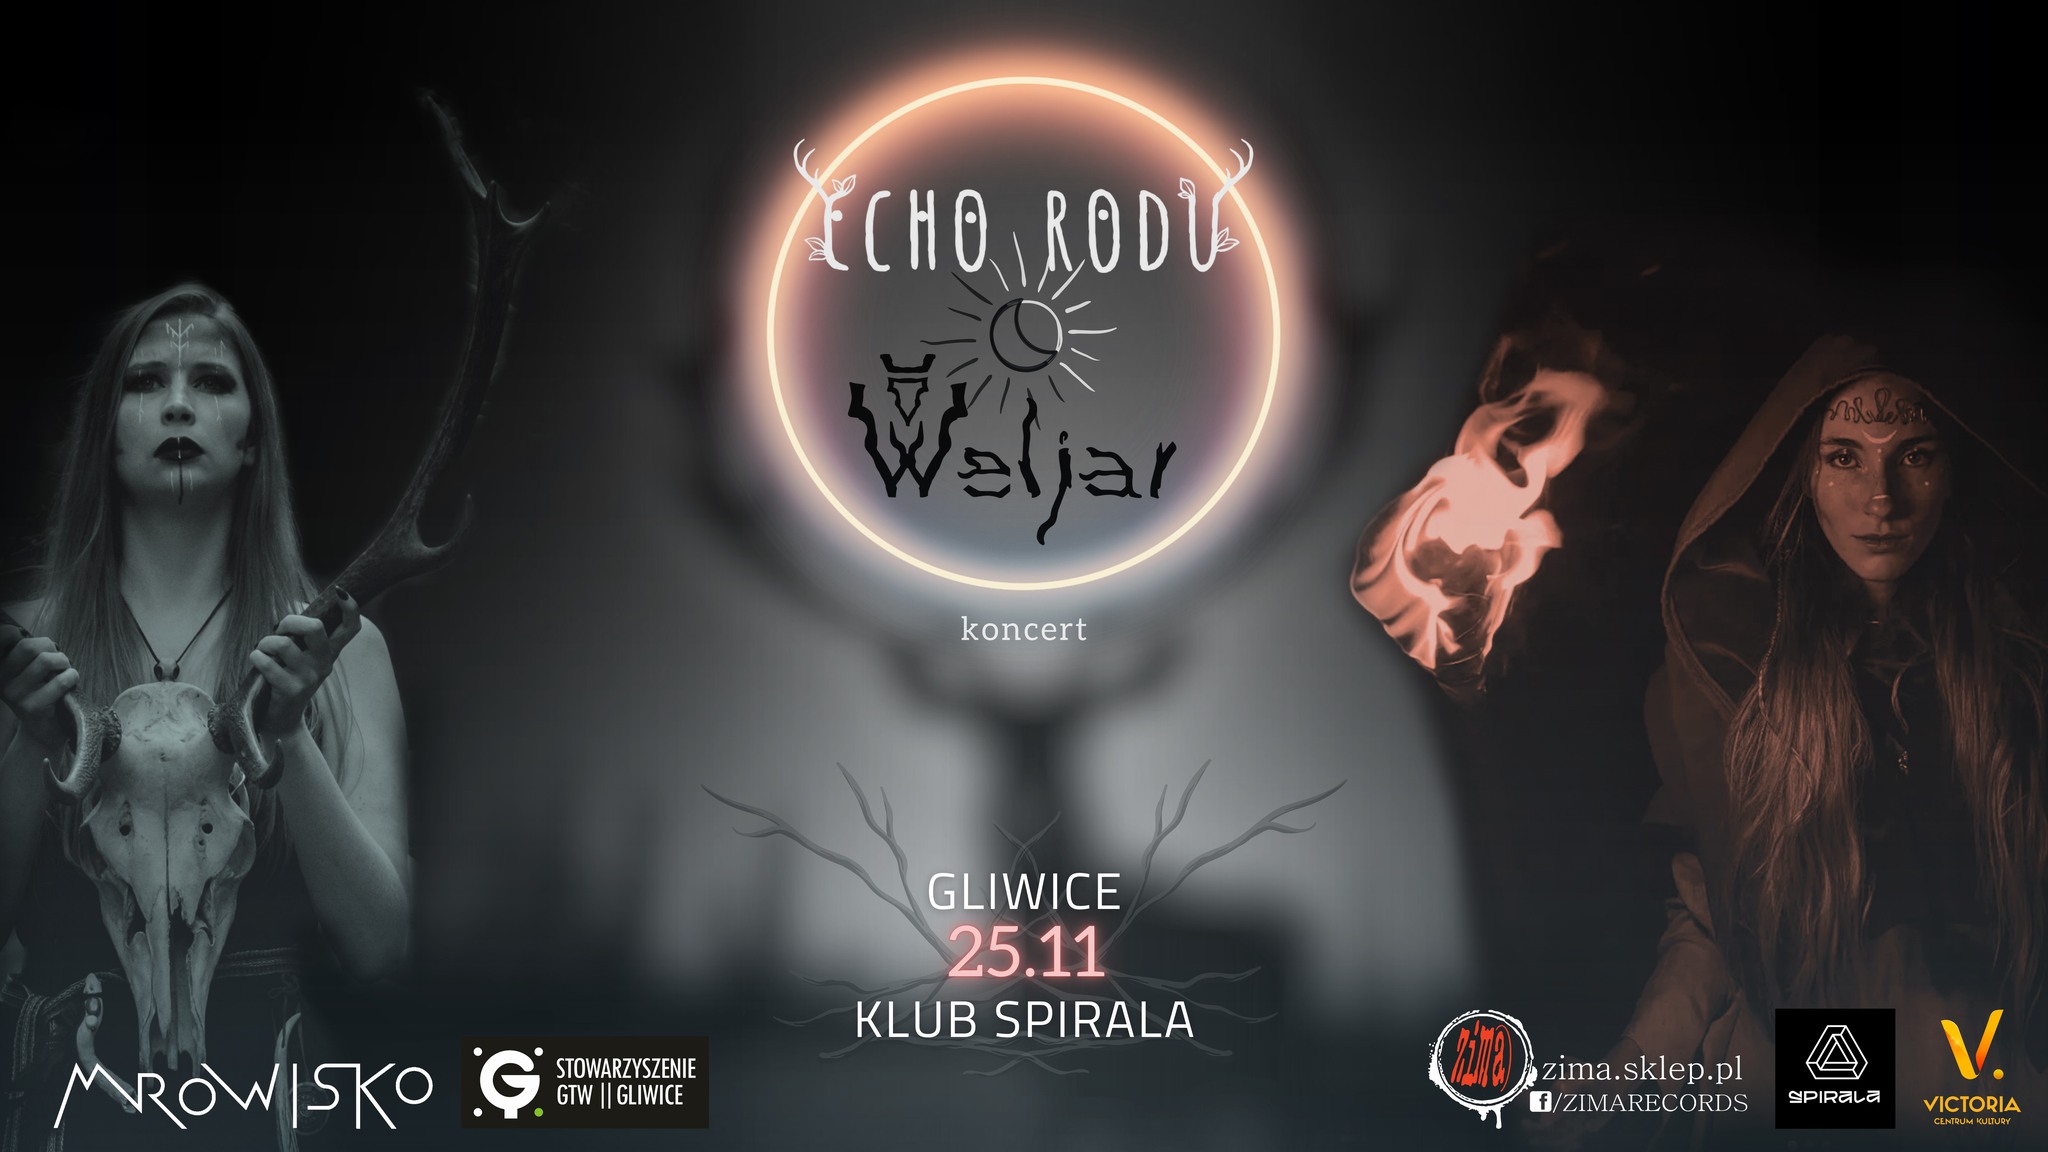 Koncert Echo Rodu & Weljar